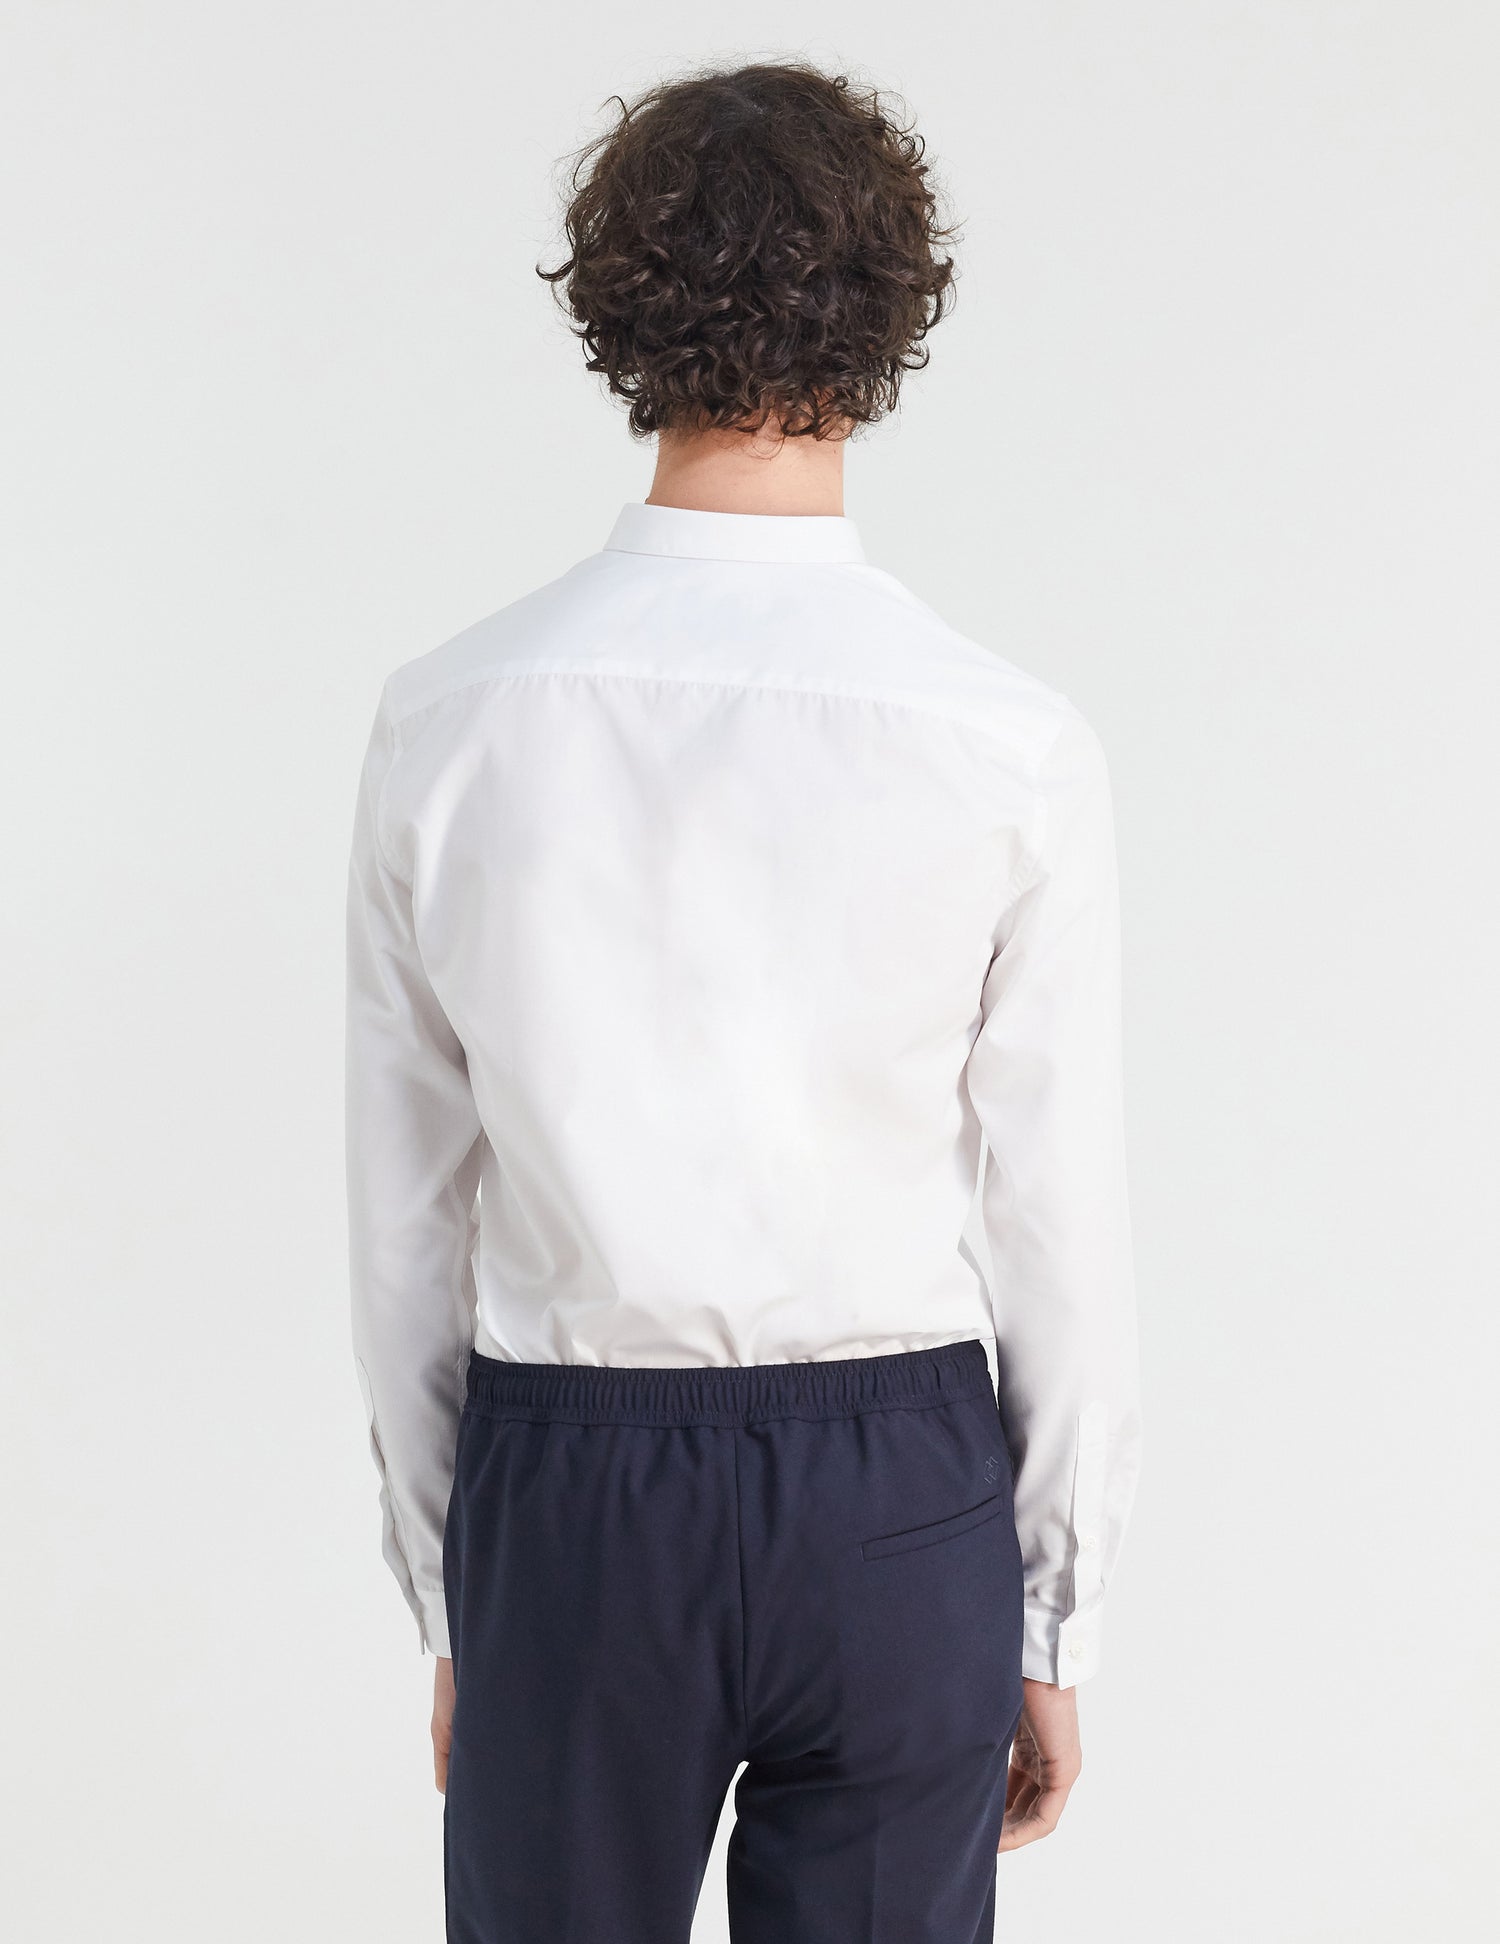 Fitted white shirt - Poplin - Sewn Collar#4